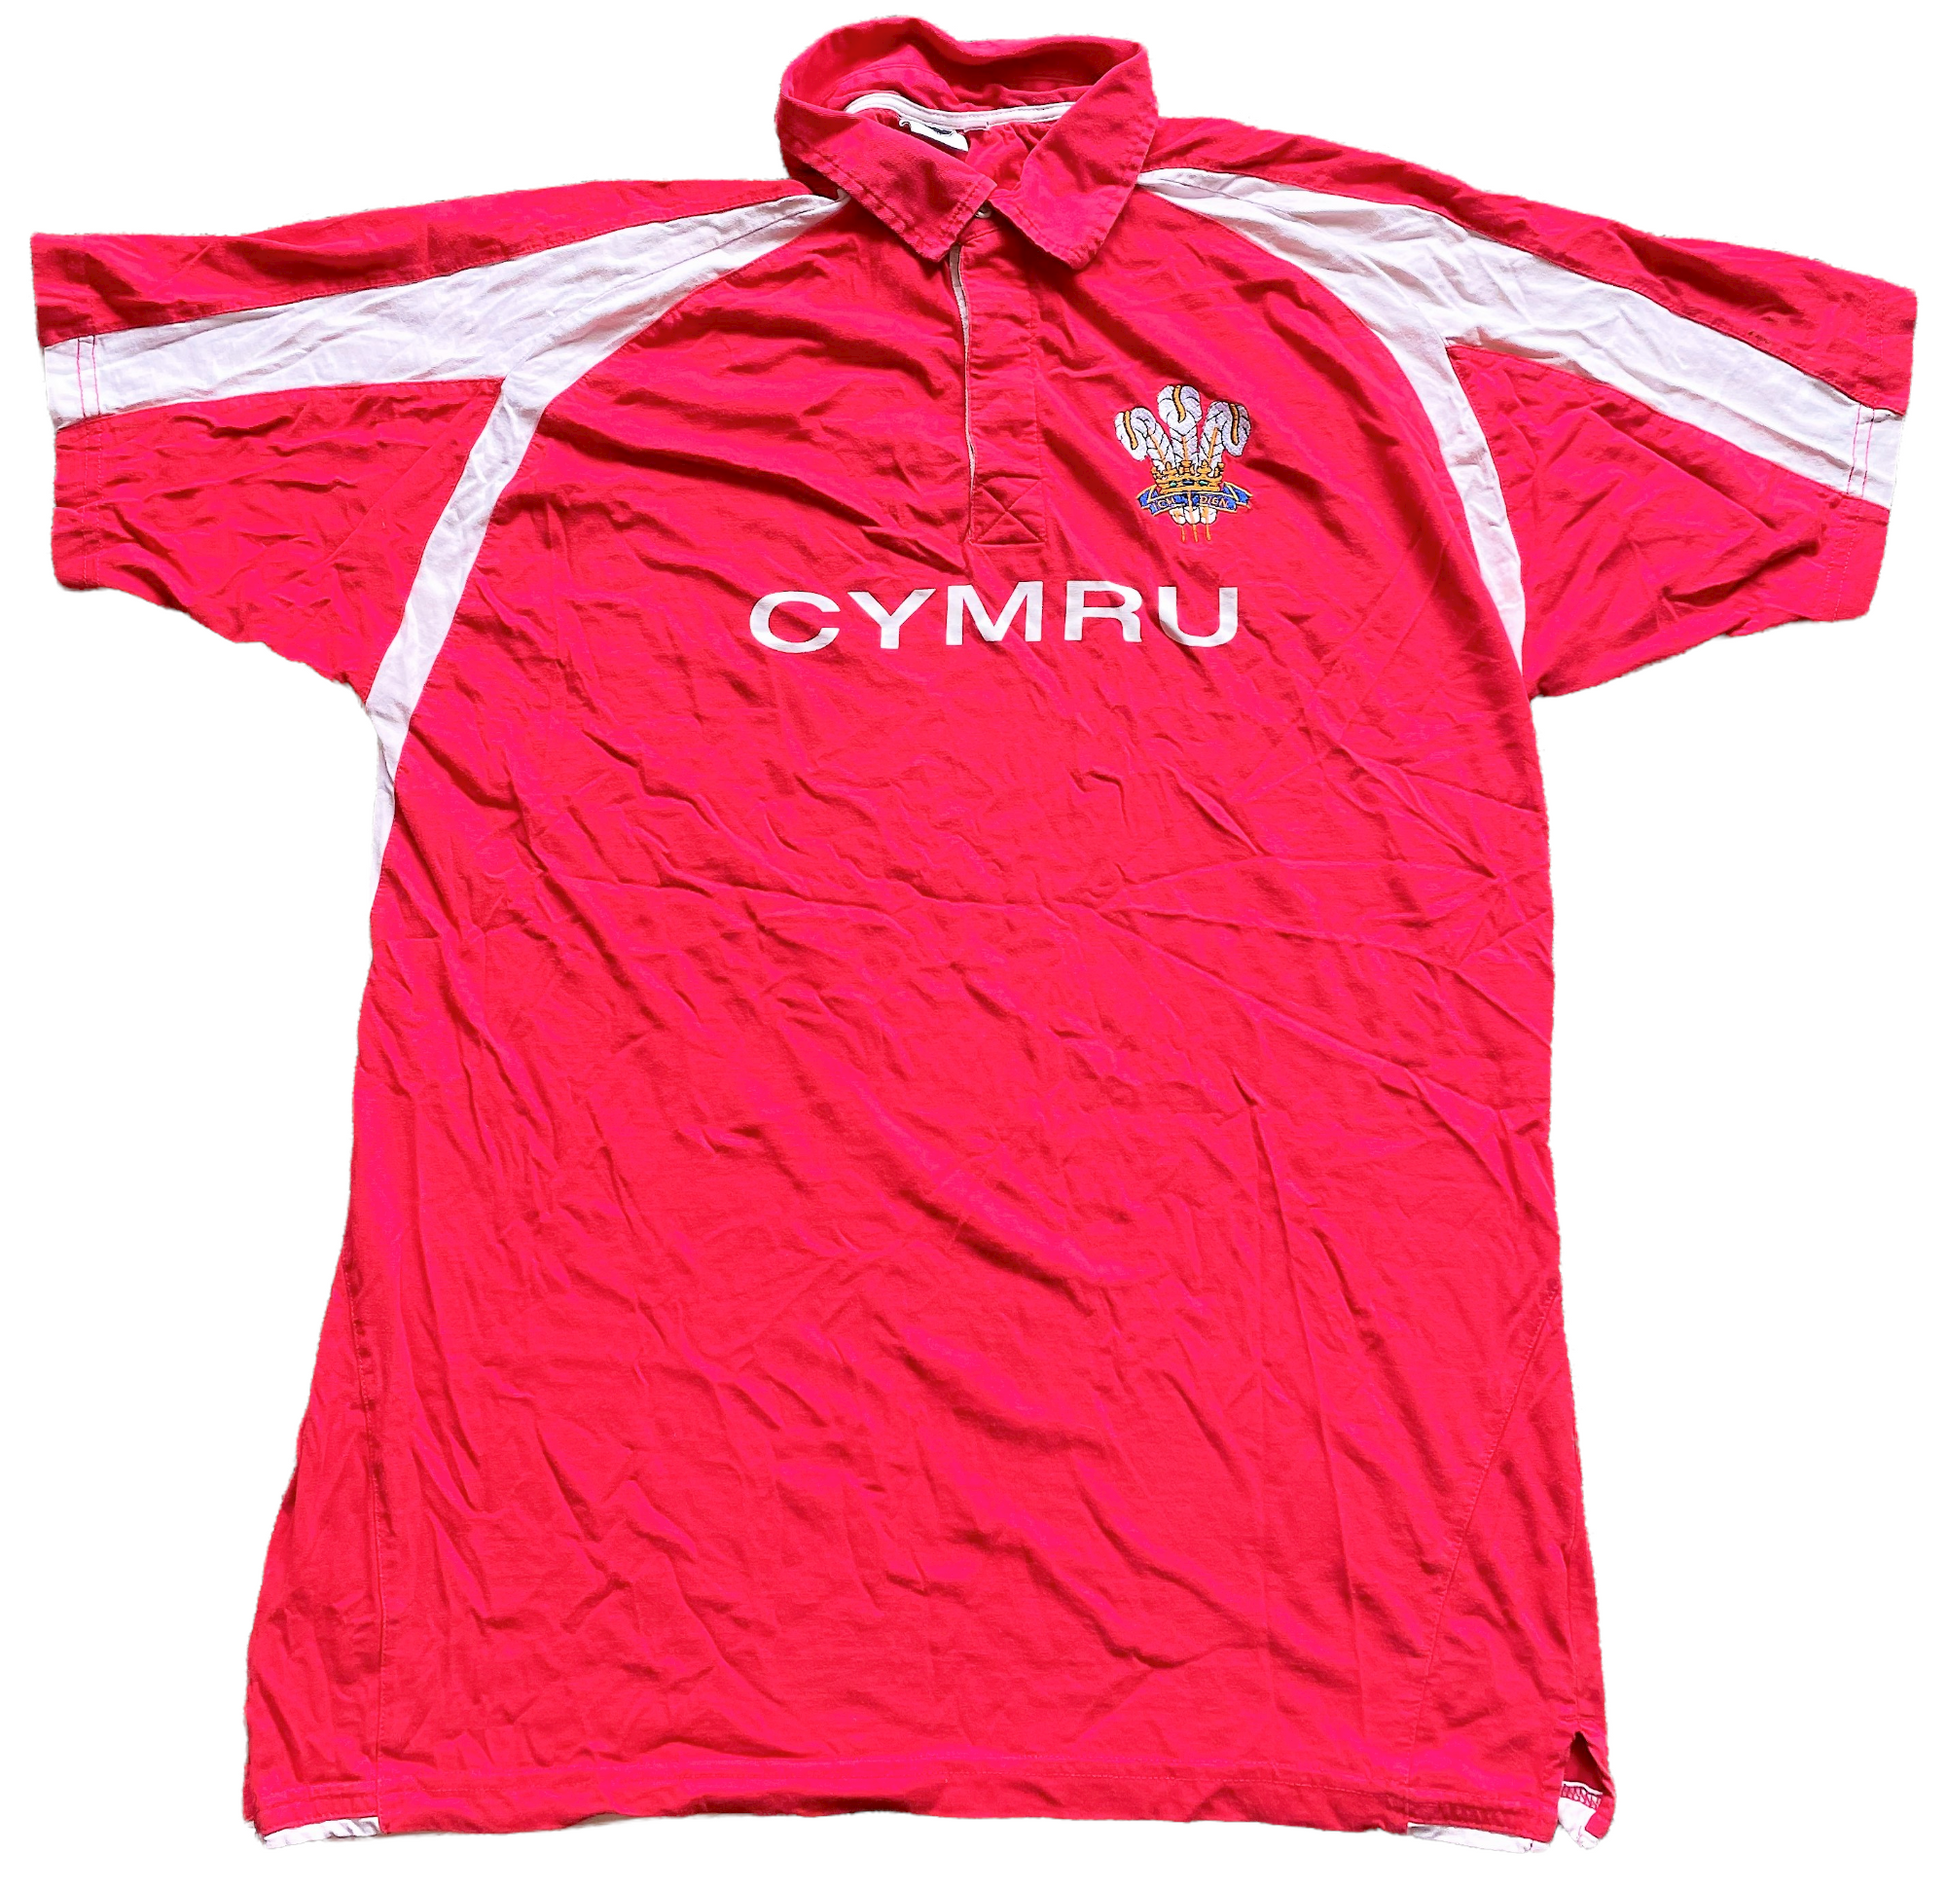 Wales Rugby Shirt CYMRU (very good) Adults XXL